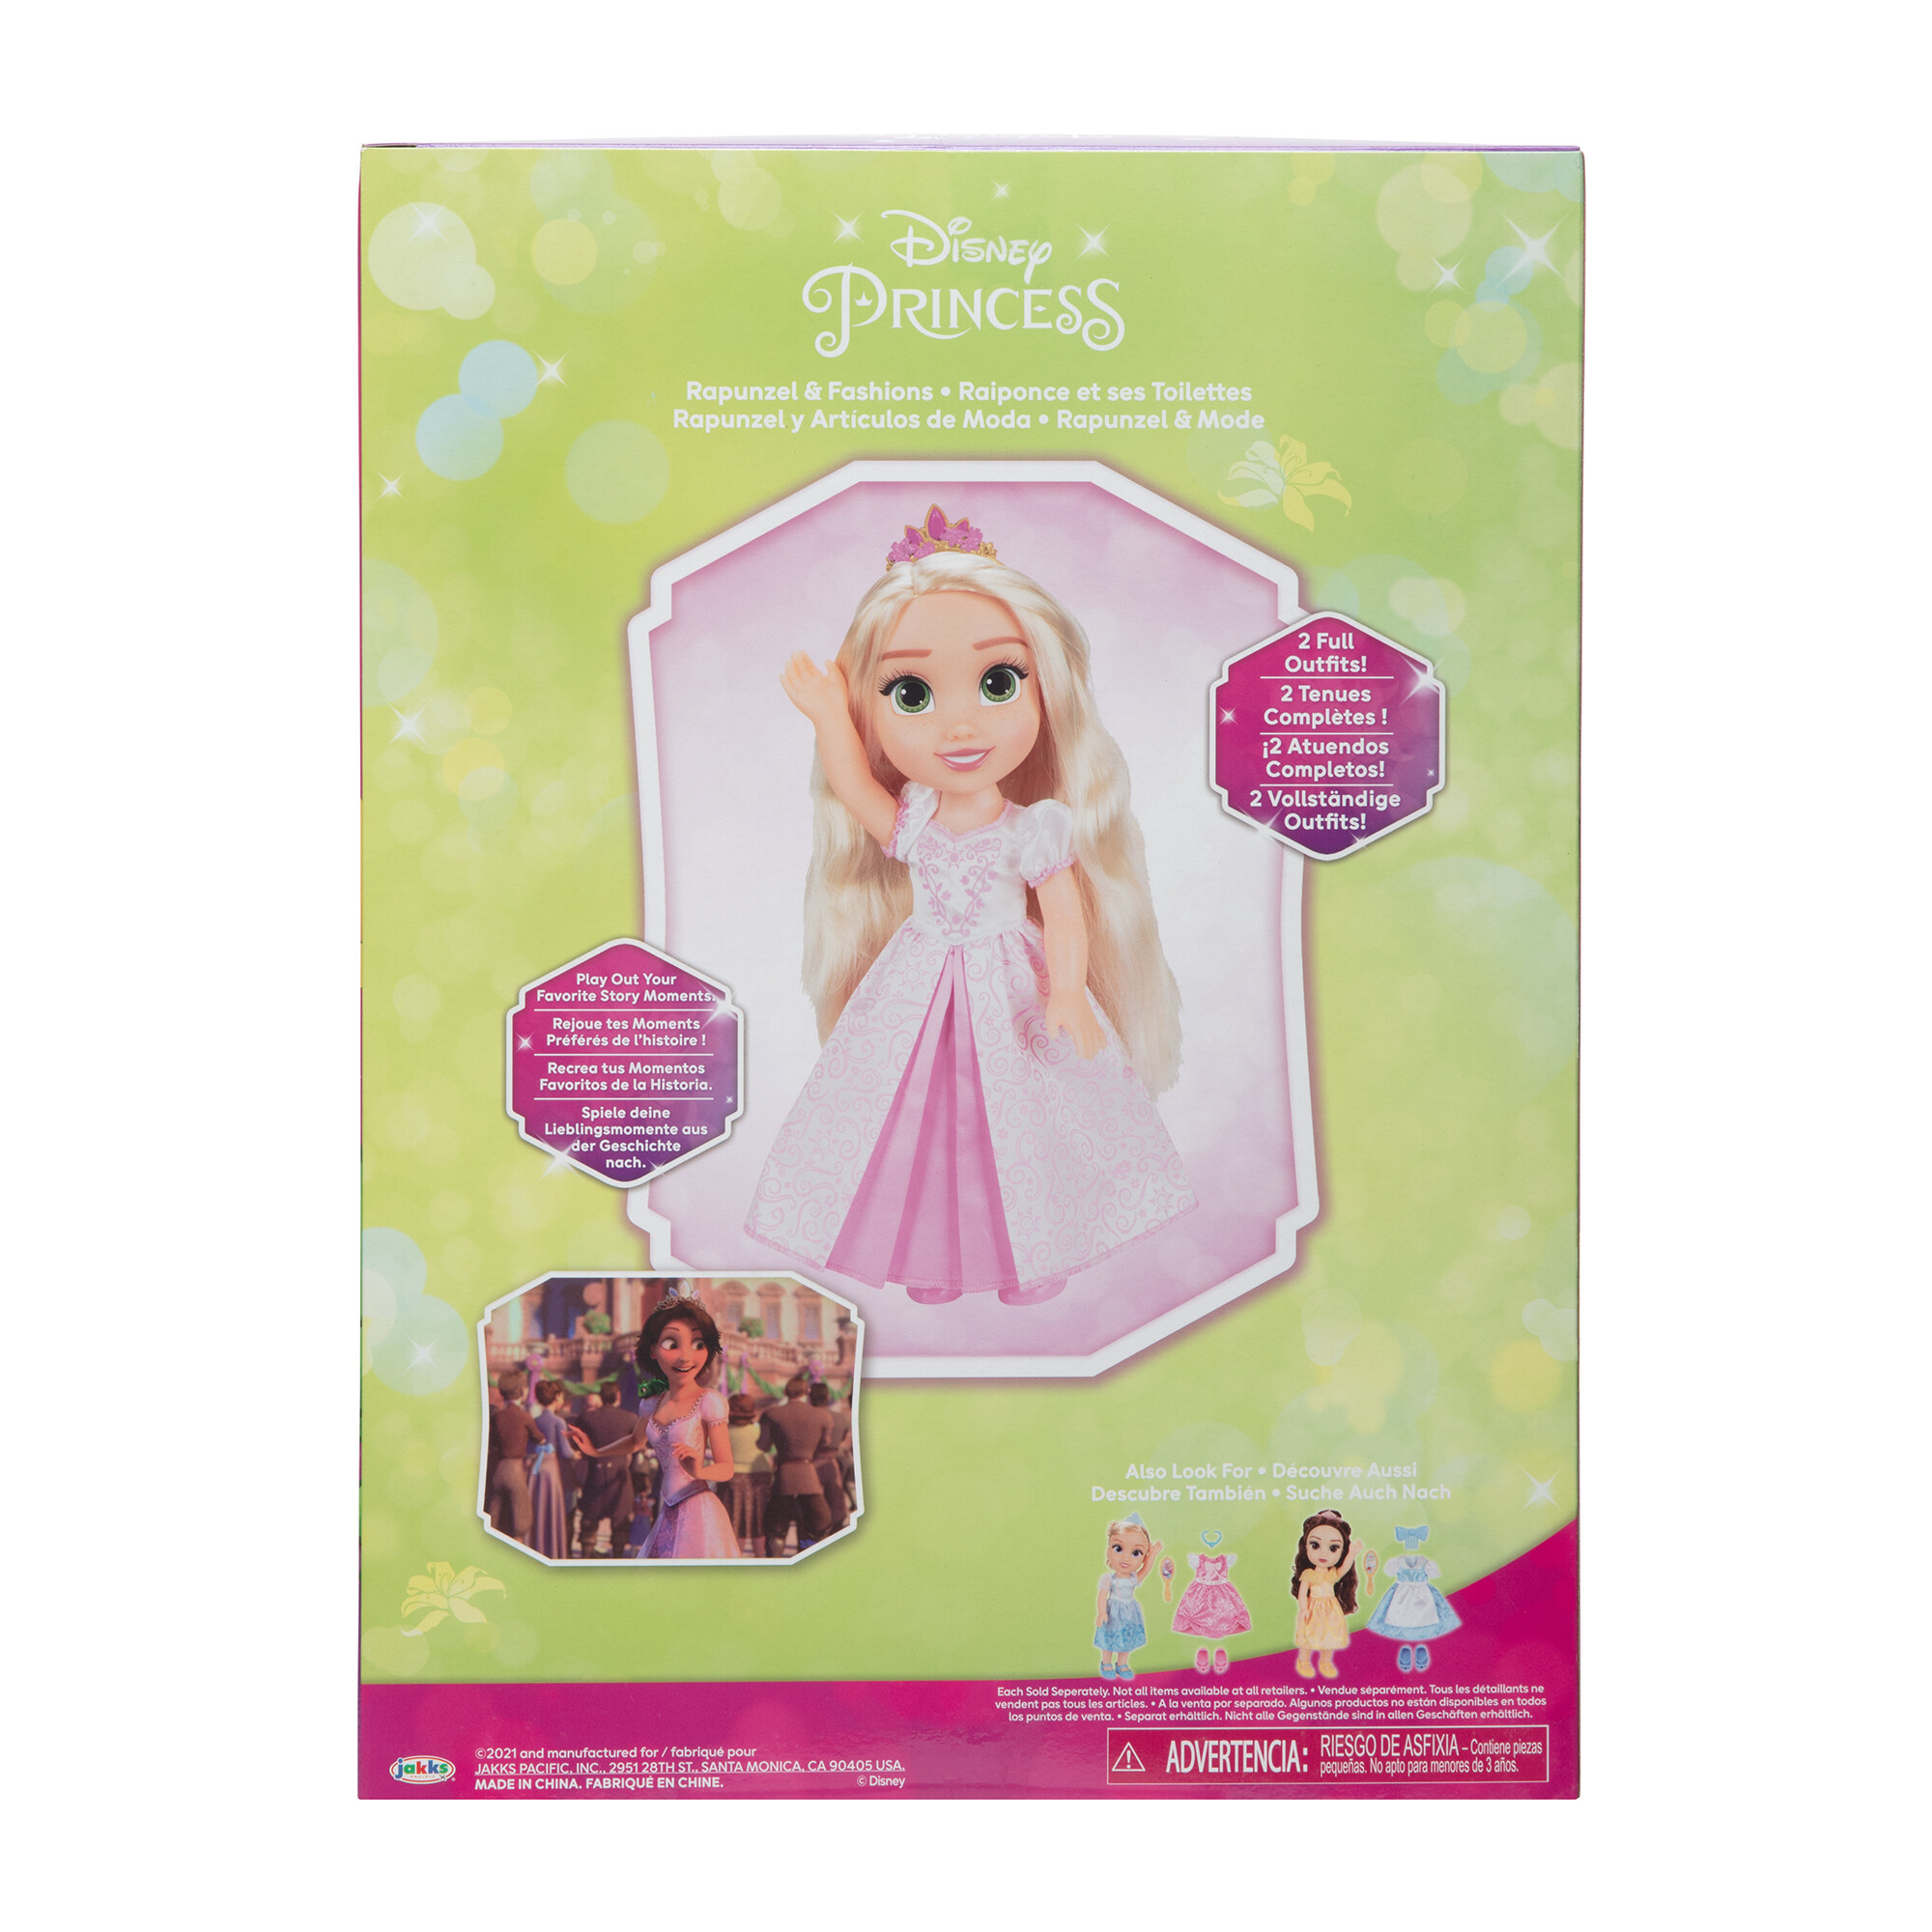 Disney princess bambola da 38 cm di rapunzel con accessori - DISNEY PRINCESS